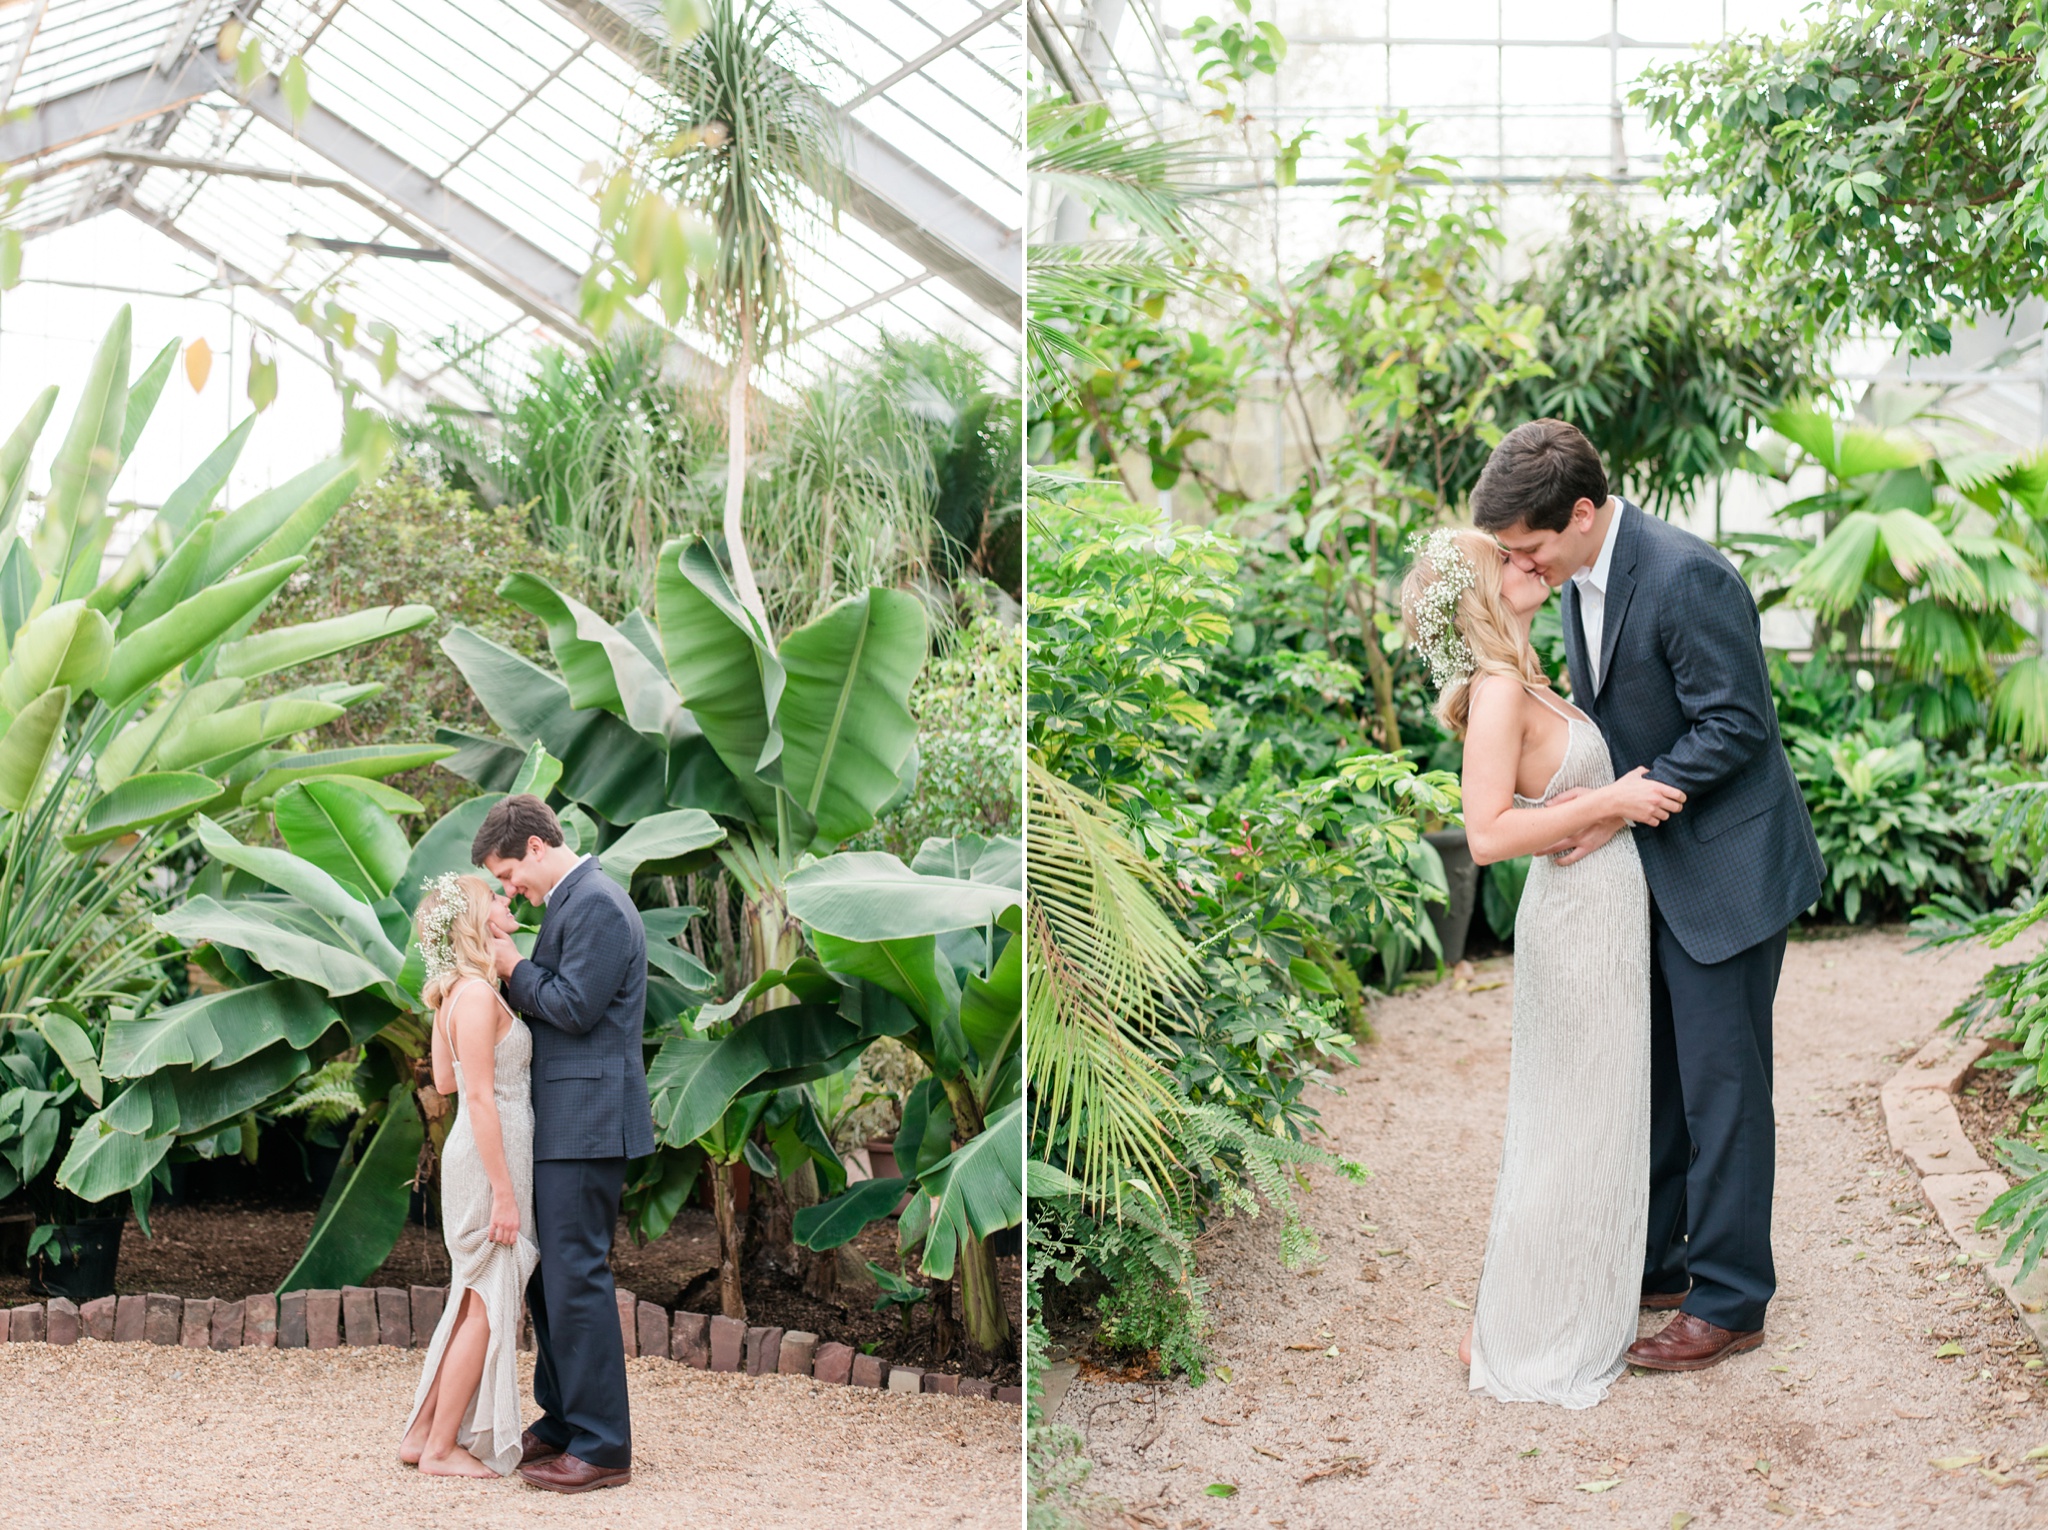 Birmingham Botanical Gardens Greenhouse Engagement Shoot Session | Birmingham Alabama Wedding Photographers_0017.jpg